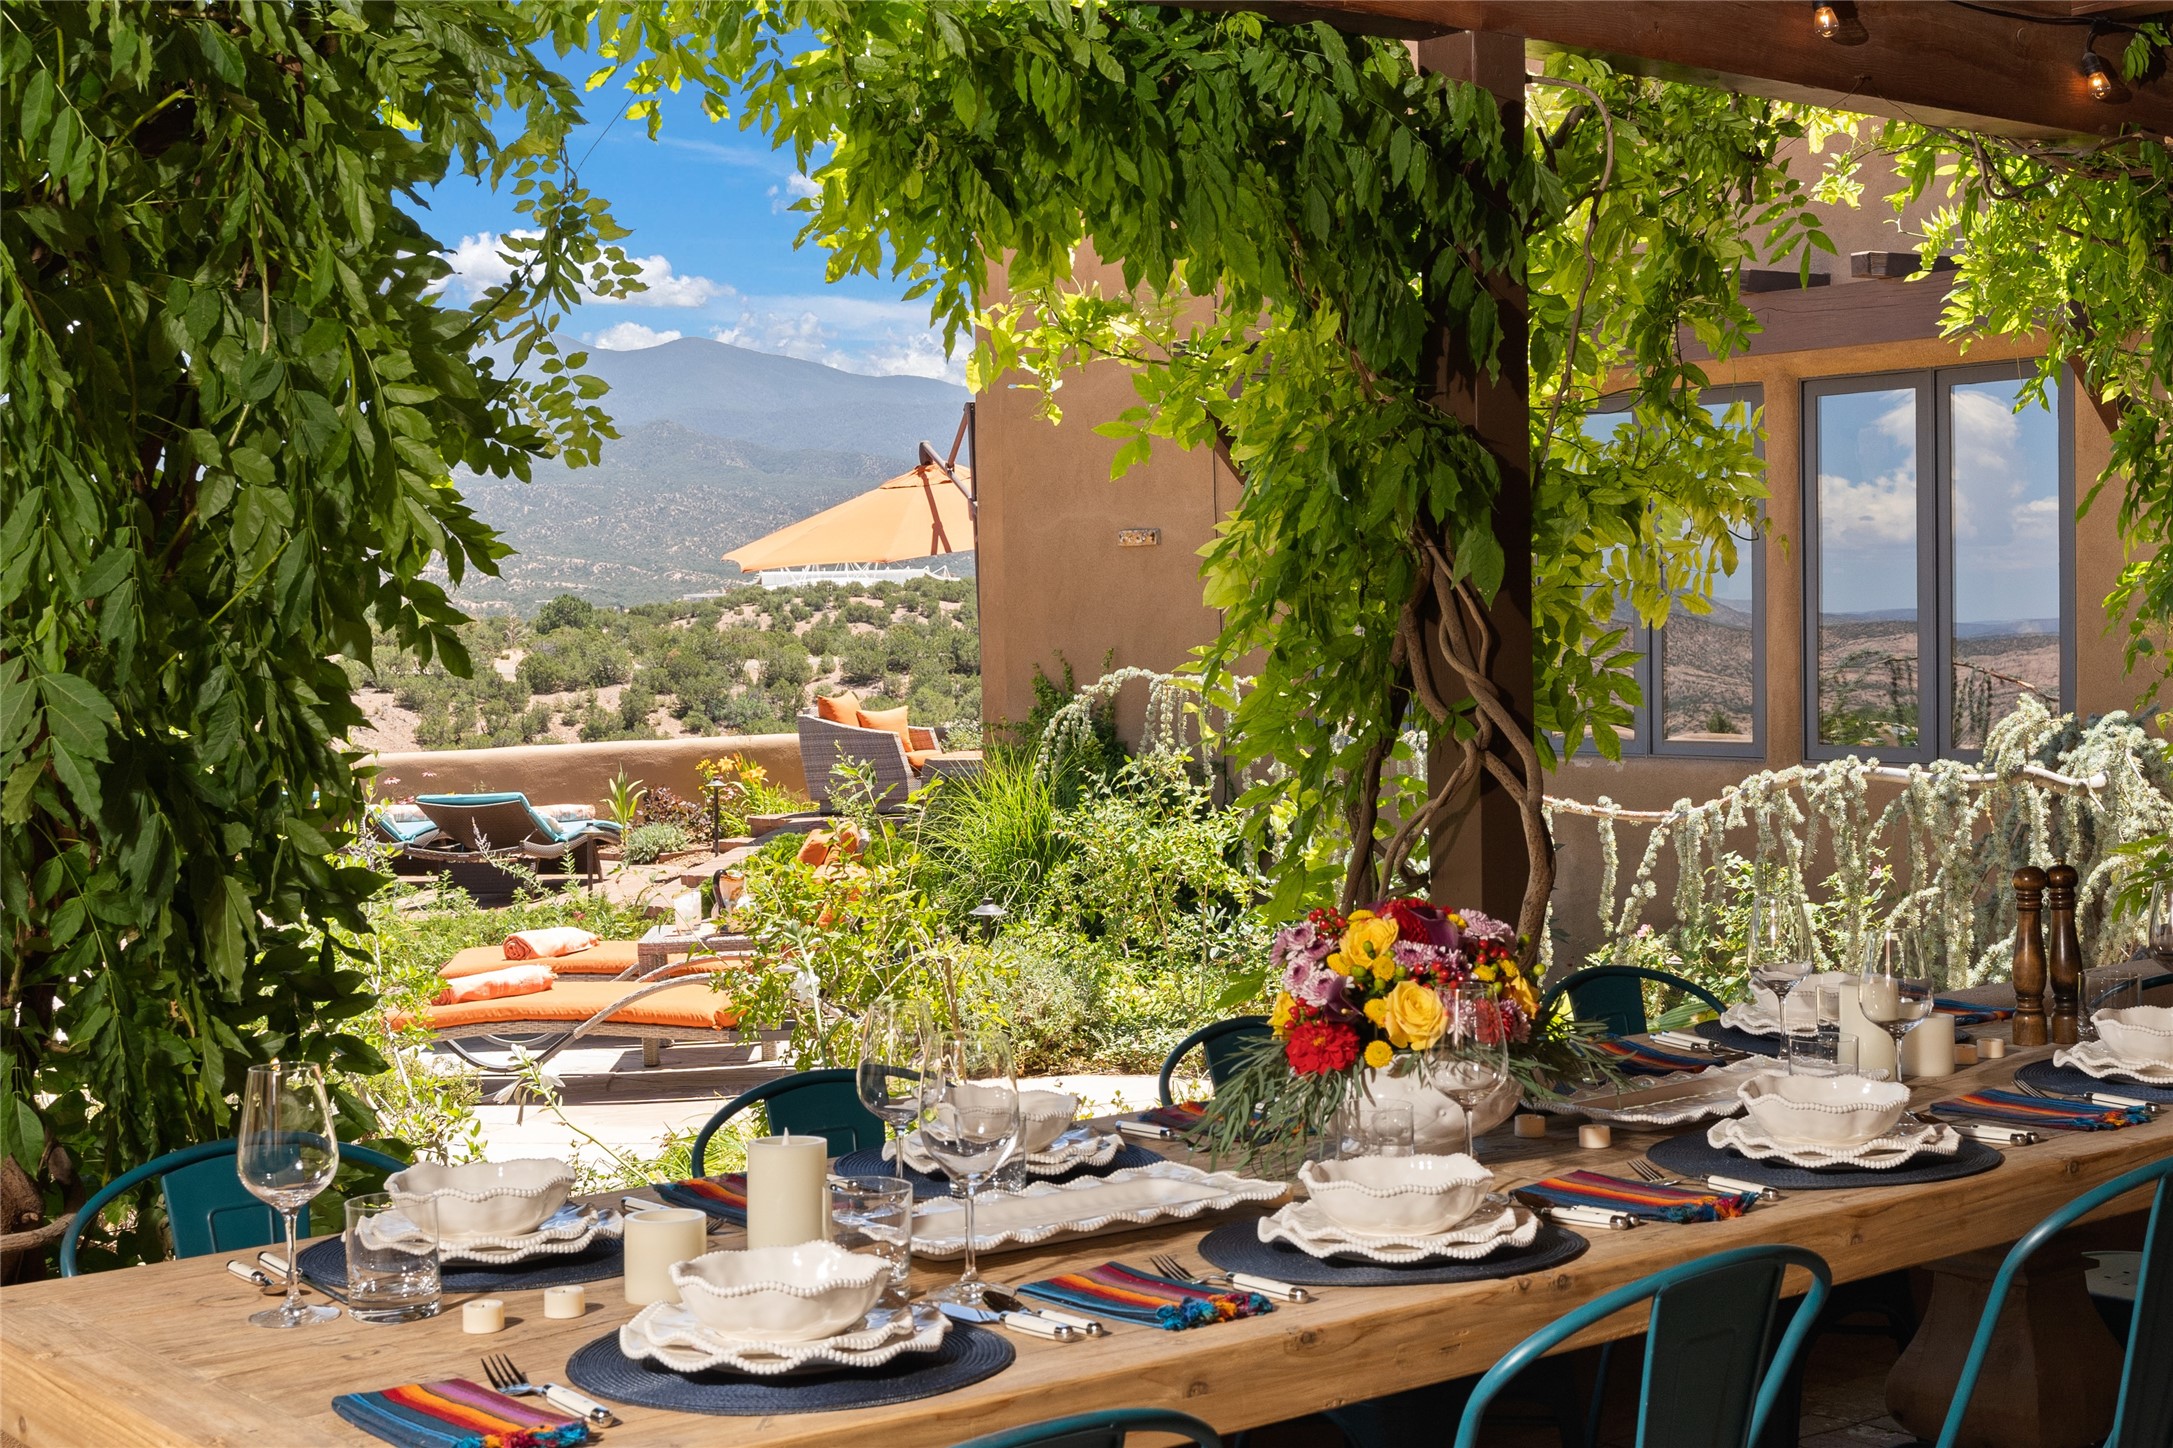 Enjoy fresco dining with sweeping mountain views!